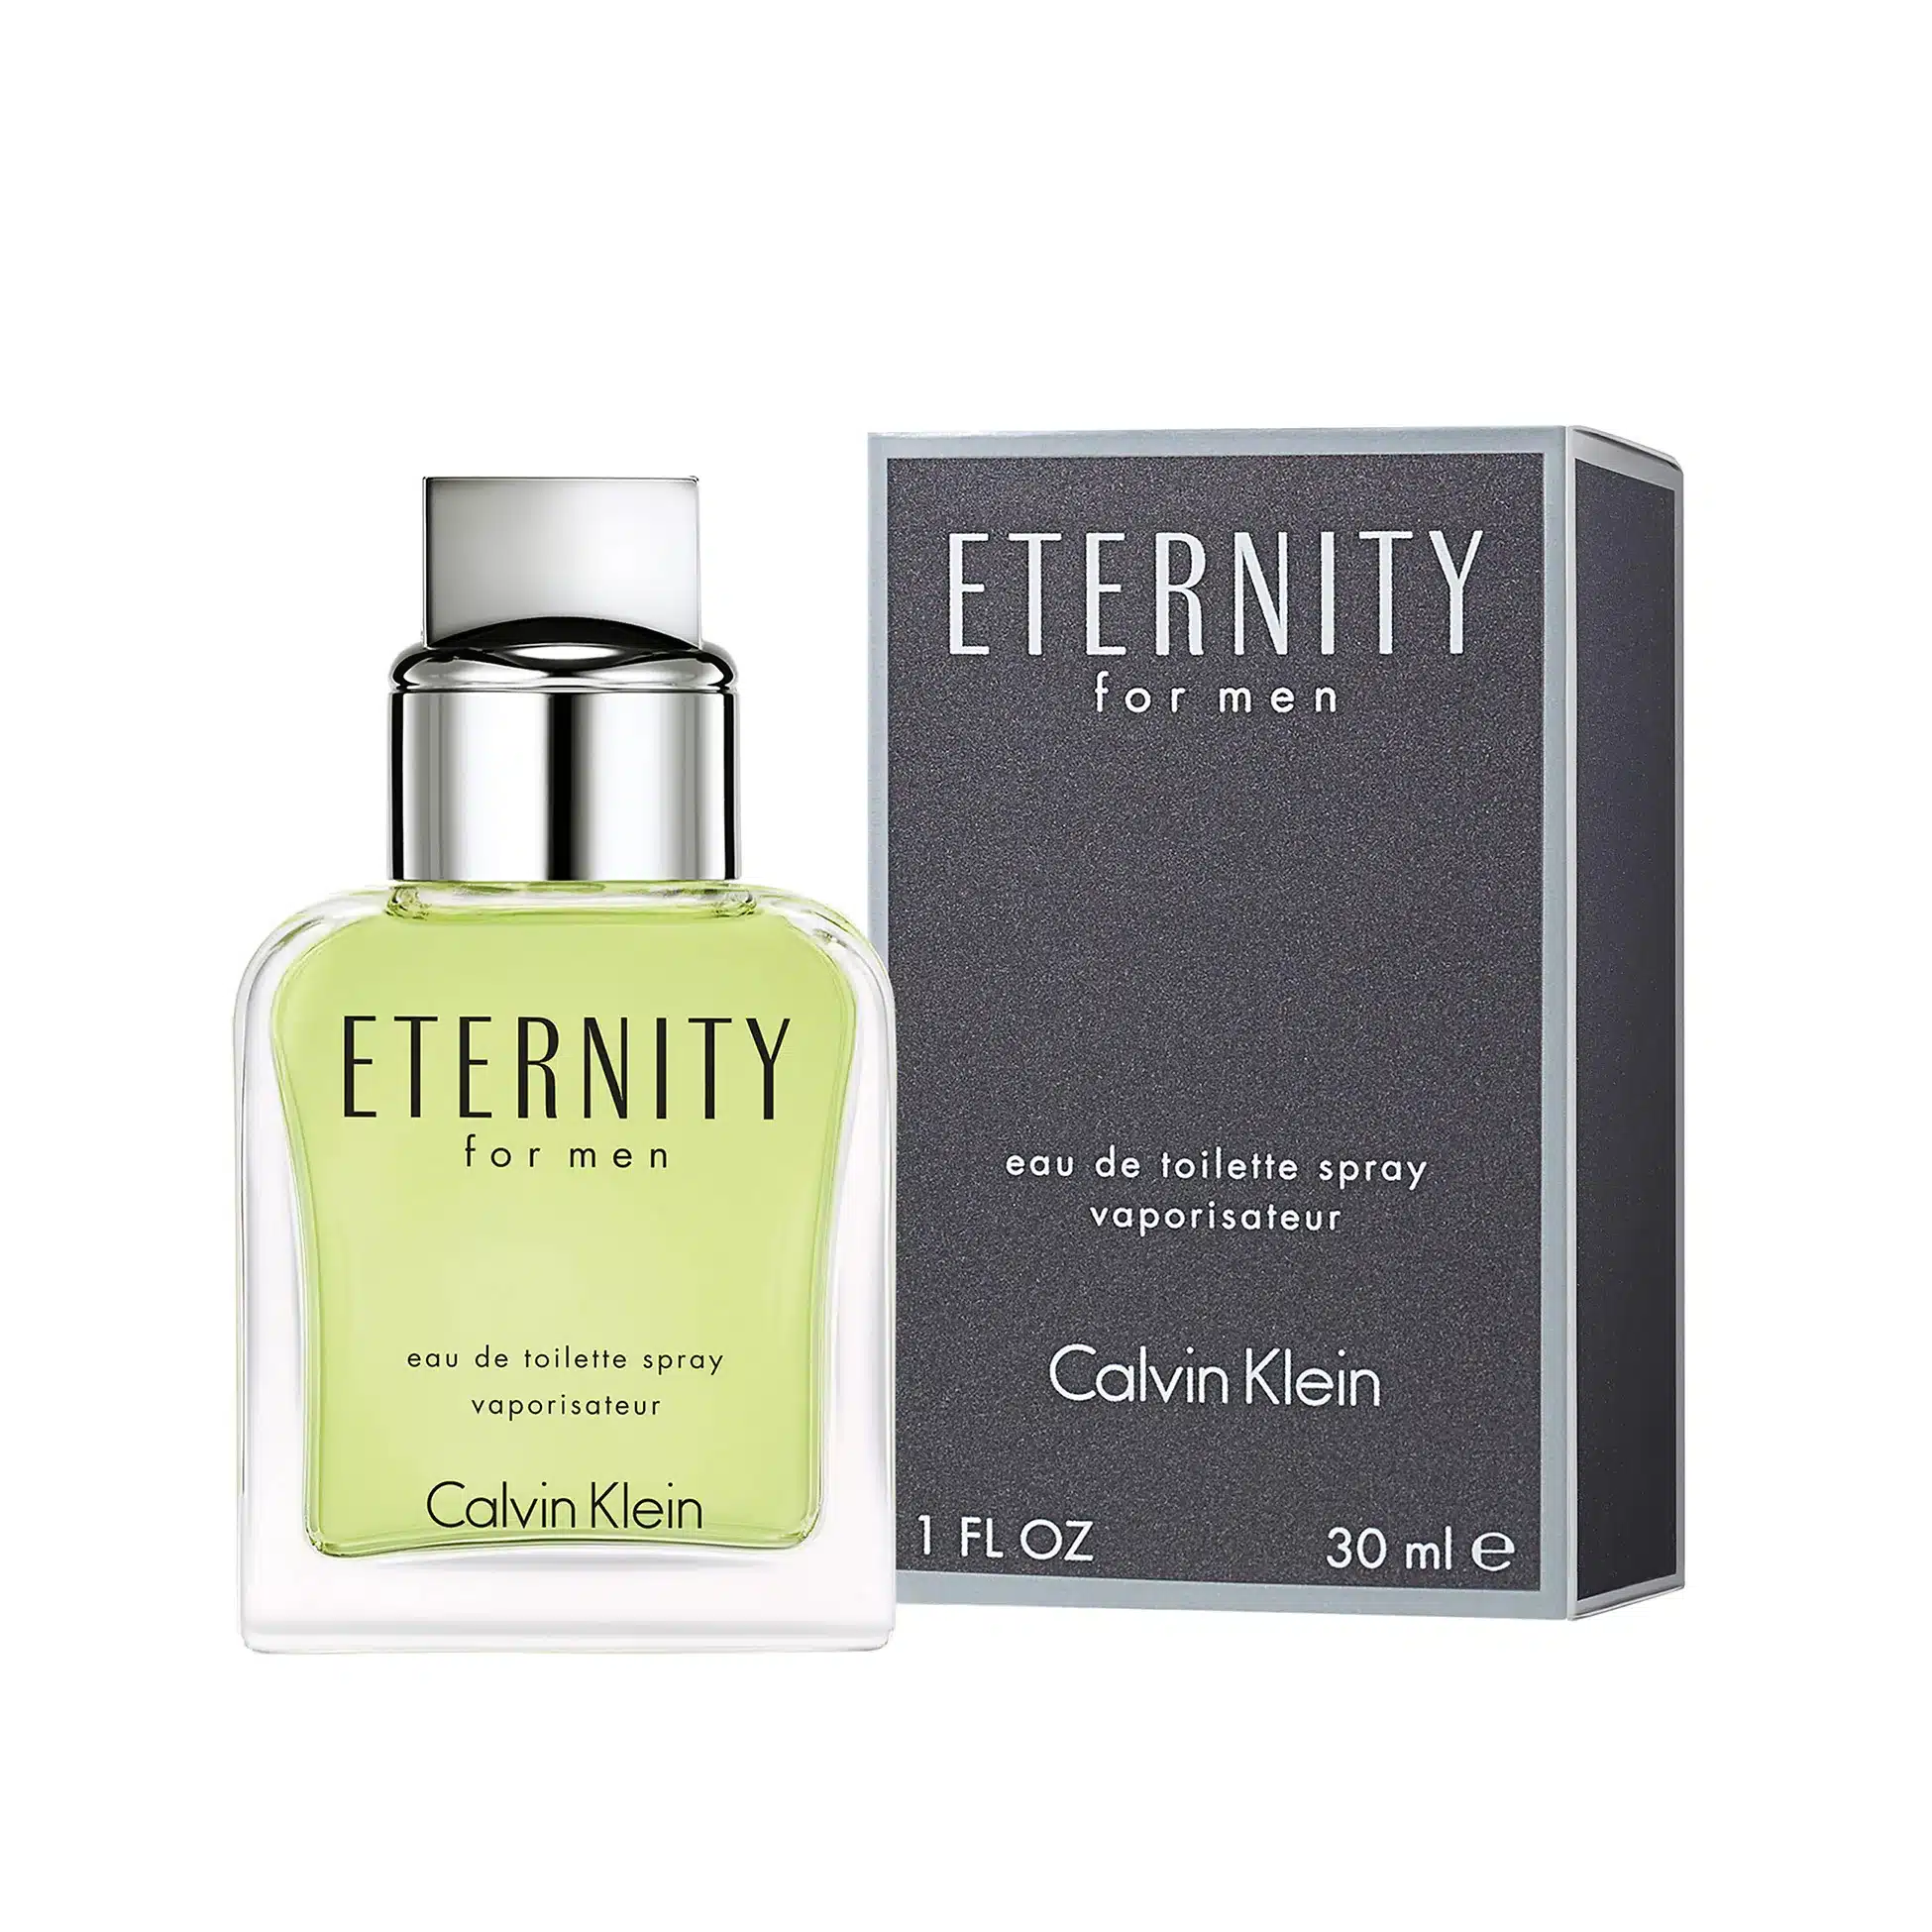 Meilleurs parfums homme Calvin Klein Eternity for Men